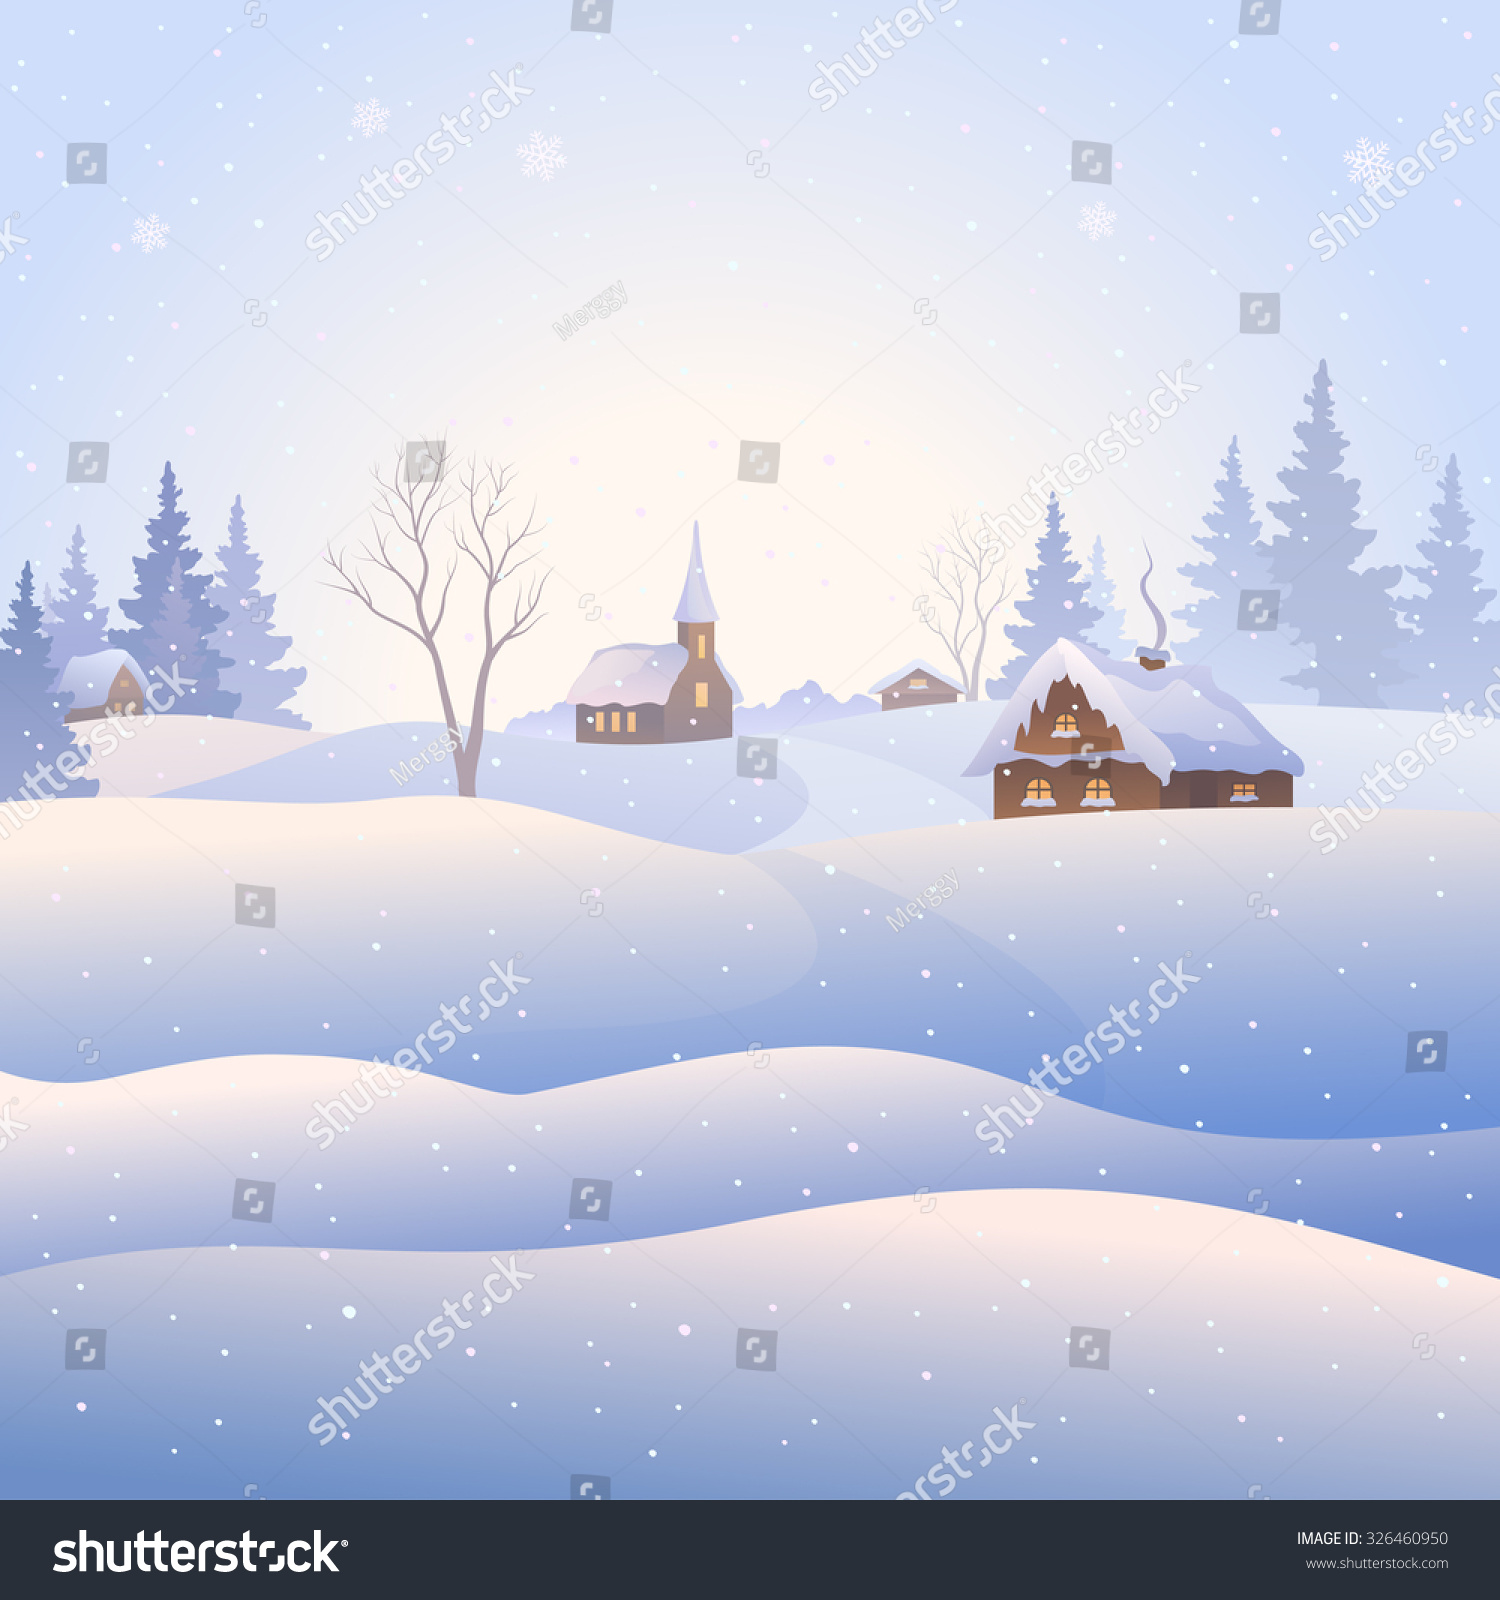 snowy village clipart - photo #10